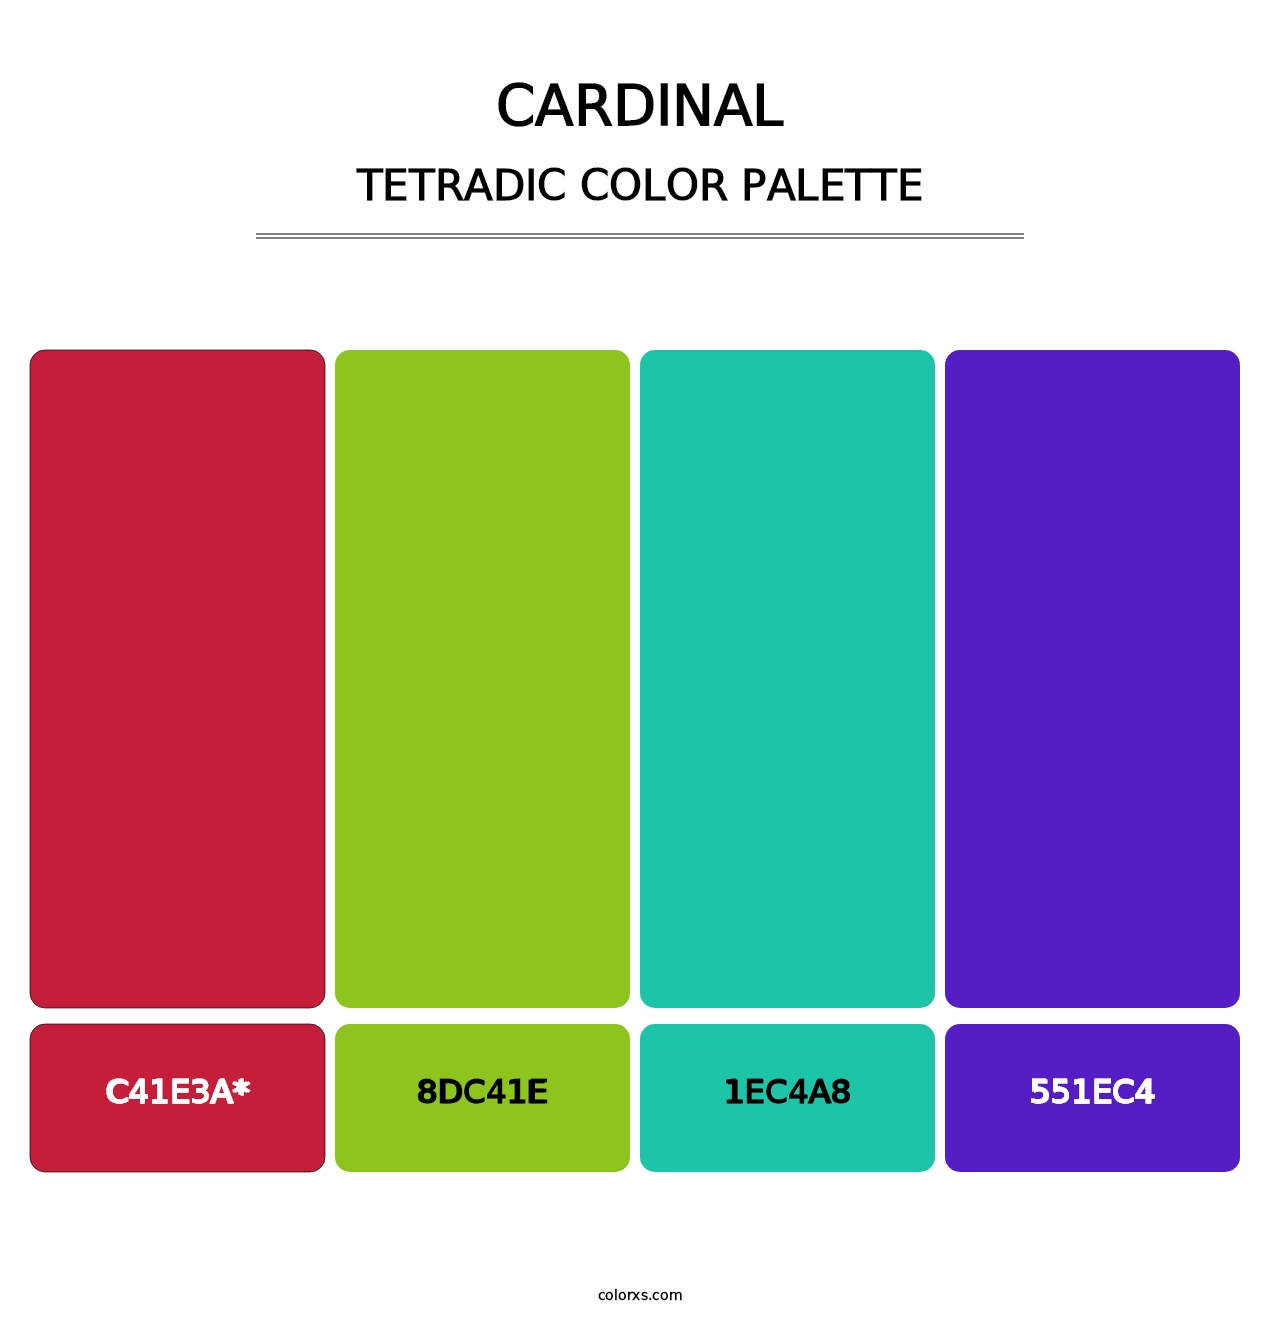 Cardinal - Tetradic Color Palette